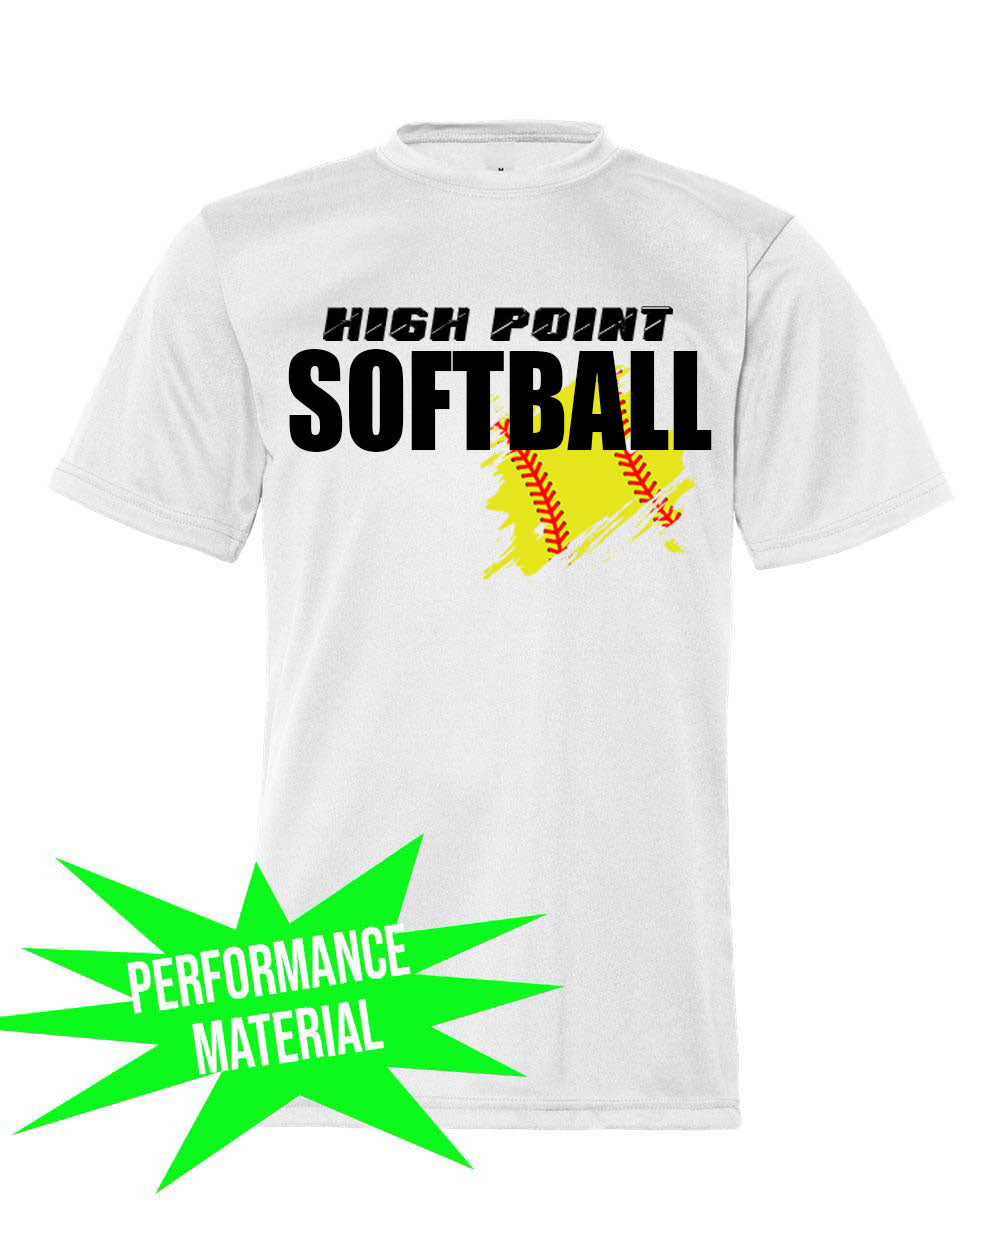 High Point Softball Performance Material design 3 T-Shirt